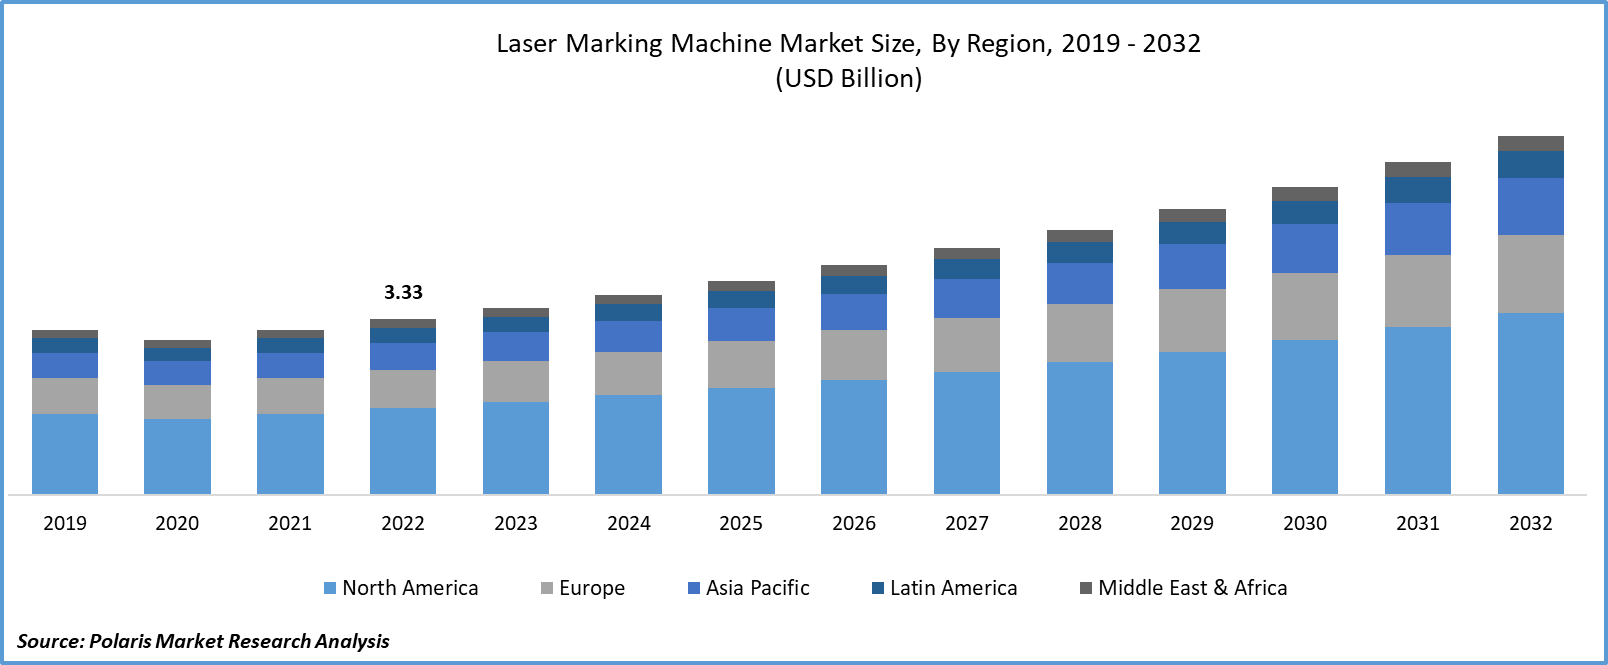 Laser Markings Machine Market Size